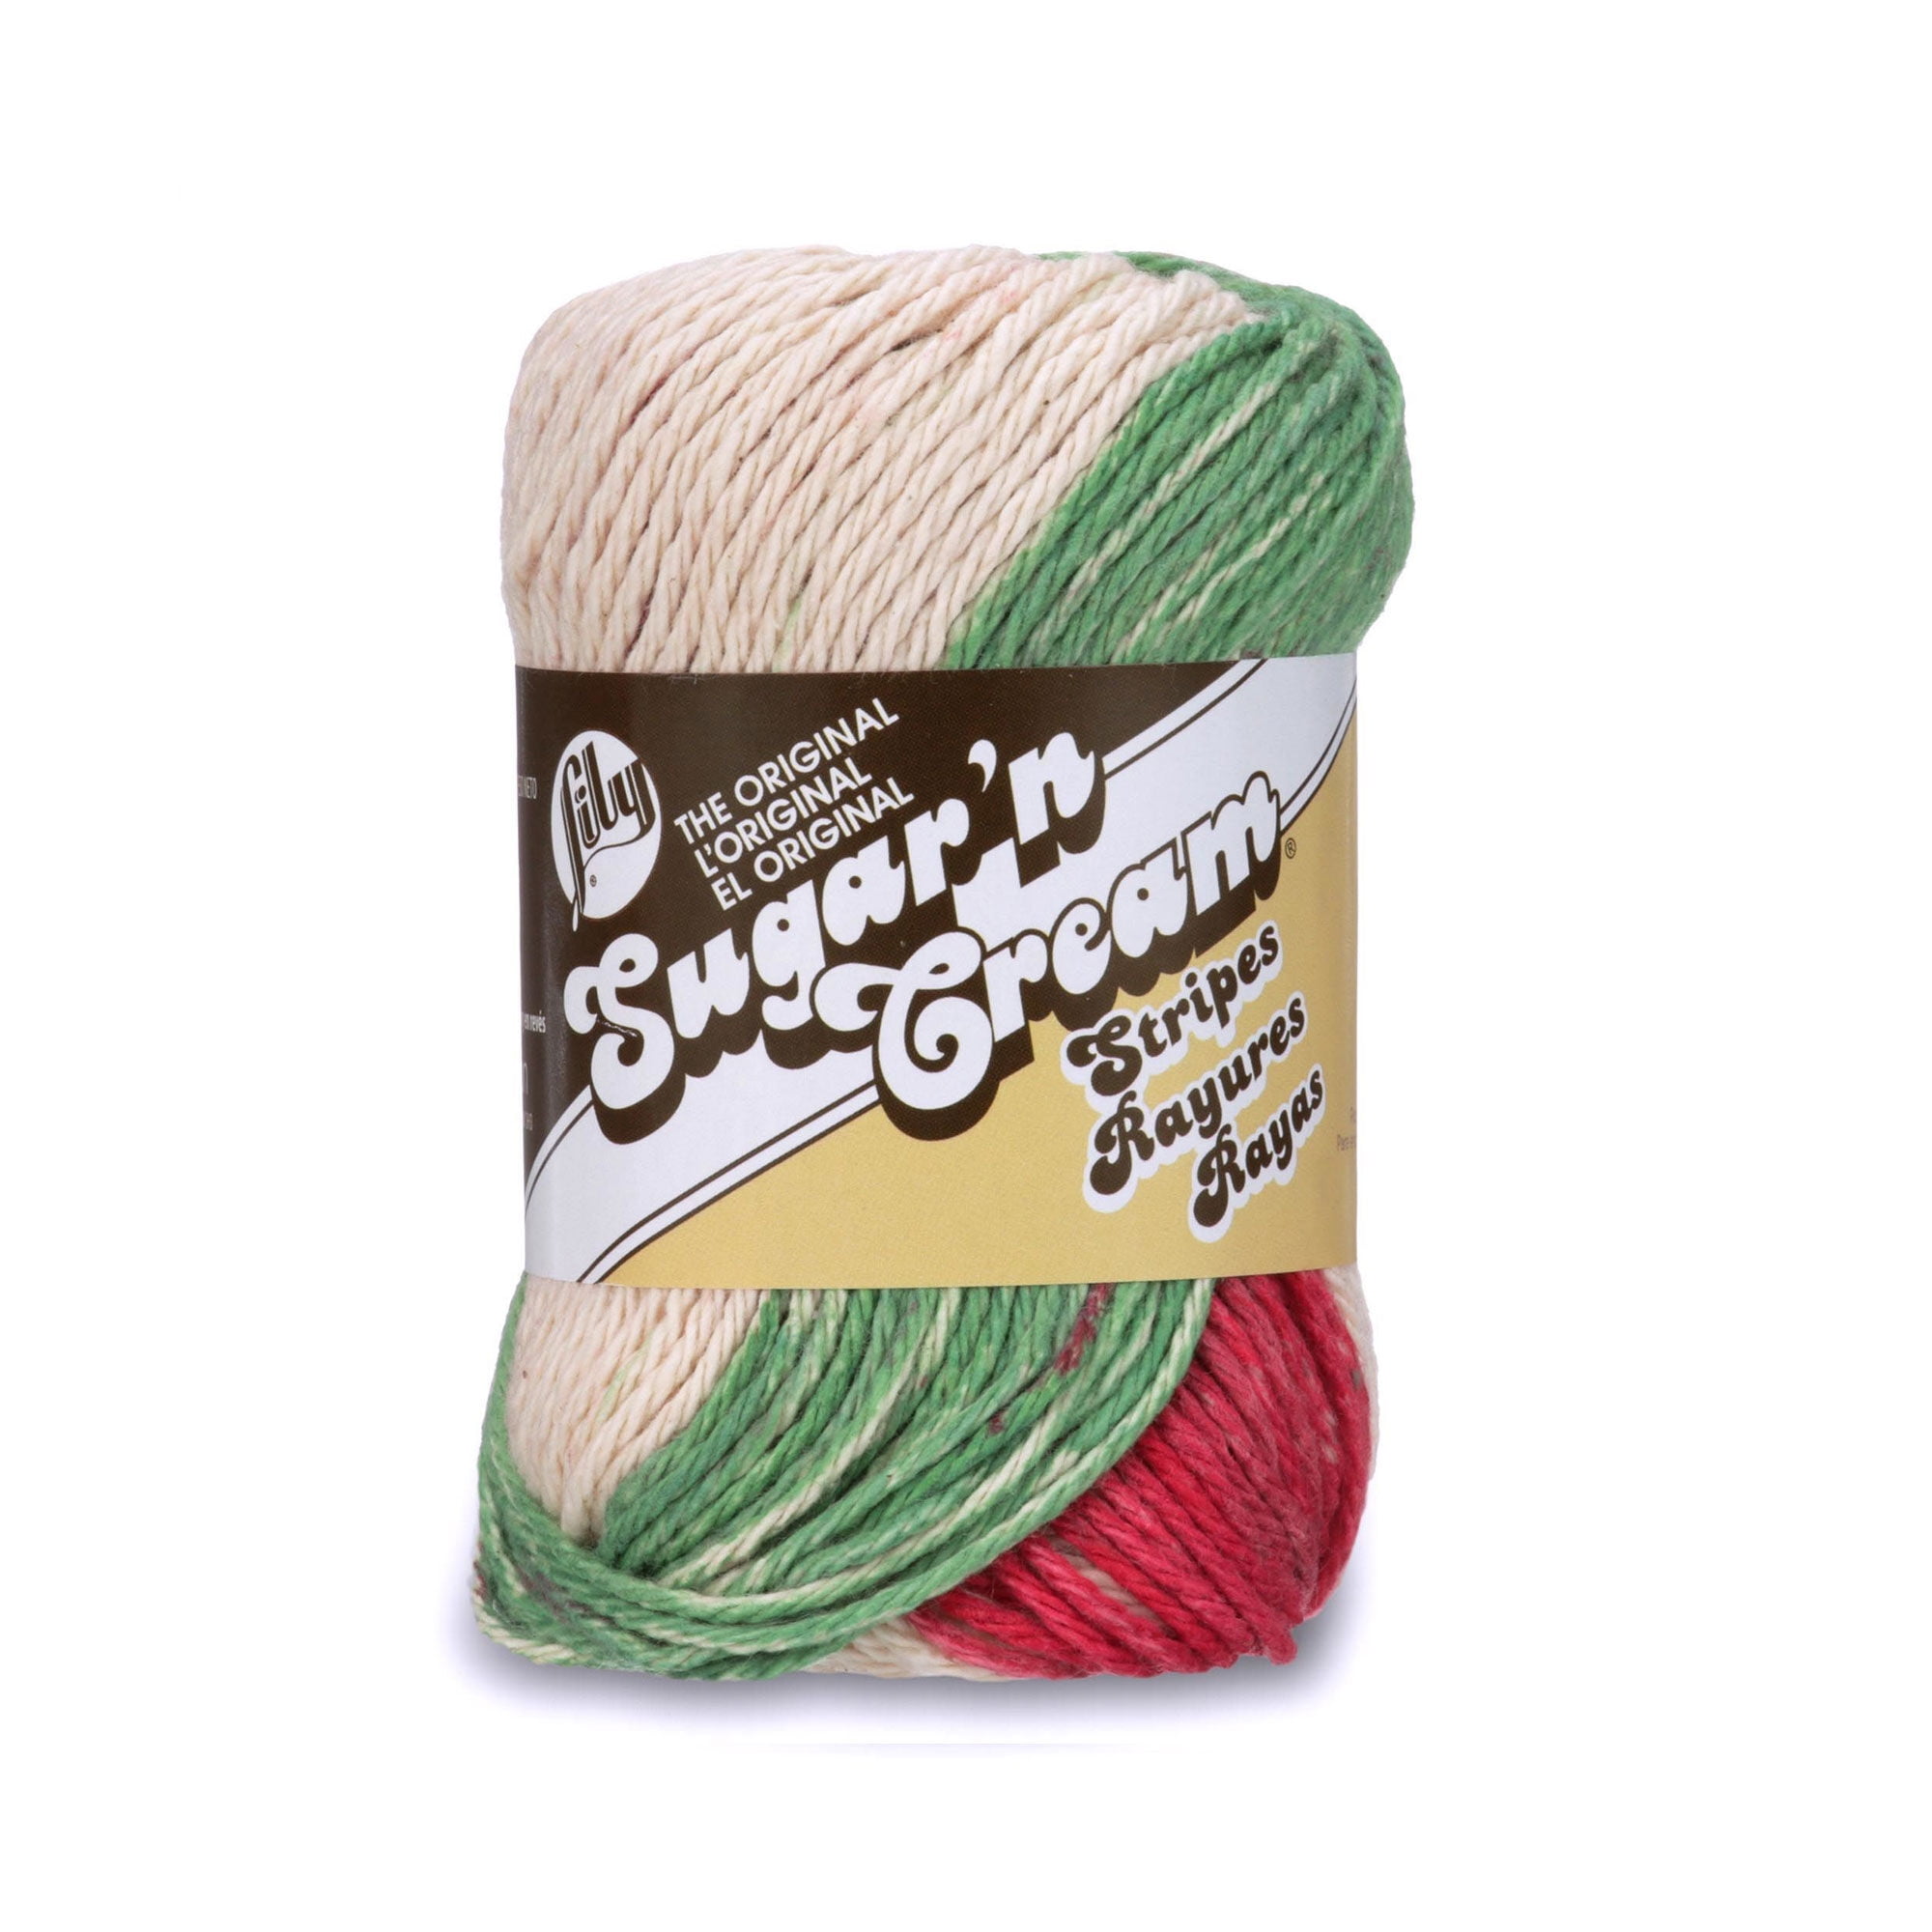 Lily Sugar'N Cream Country Stripes Yarn - 6 Pack of 57g/2oz